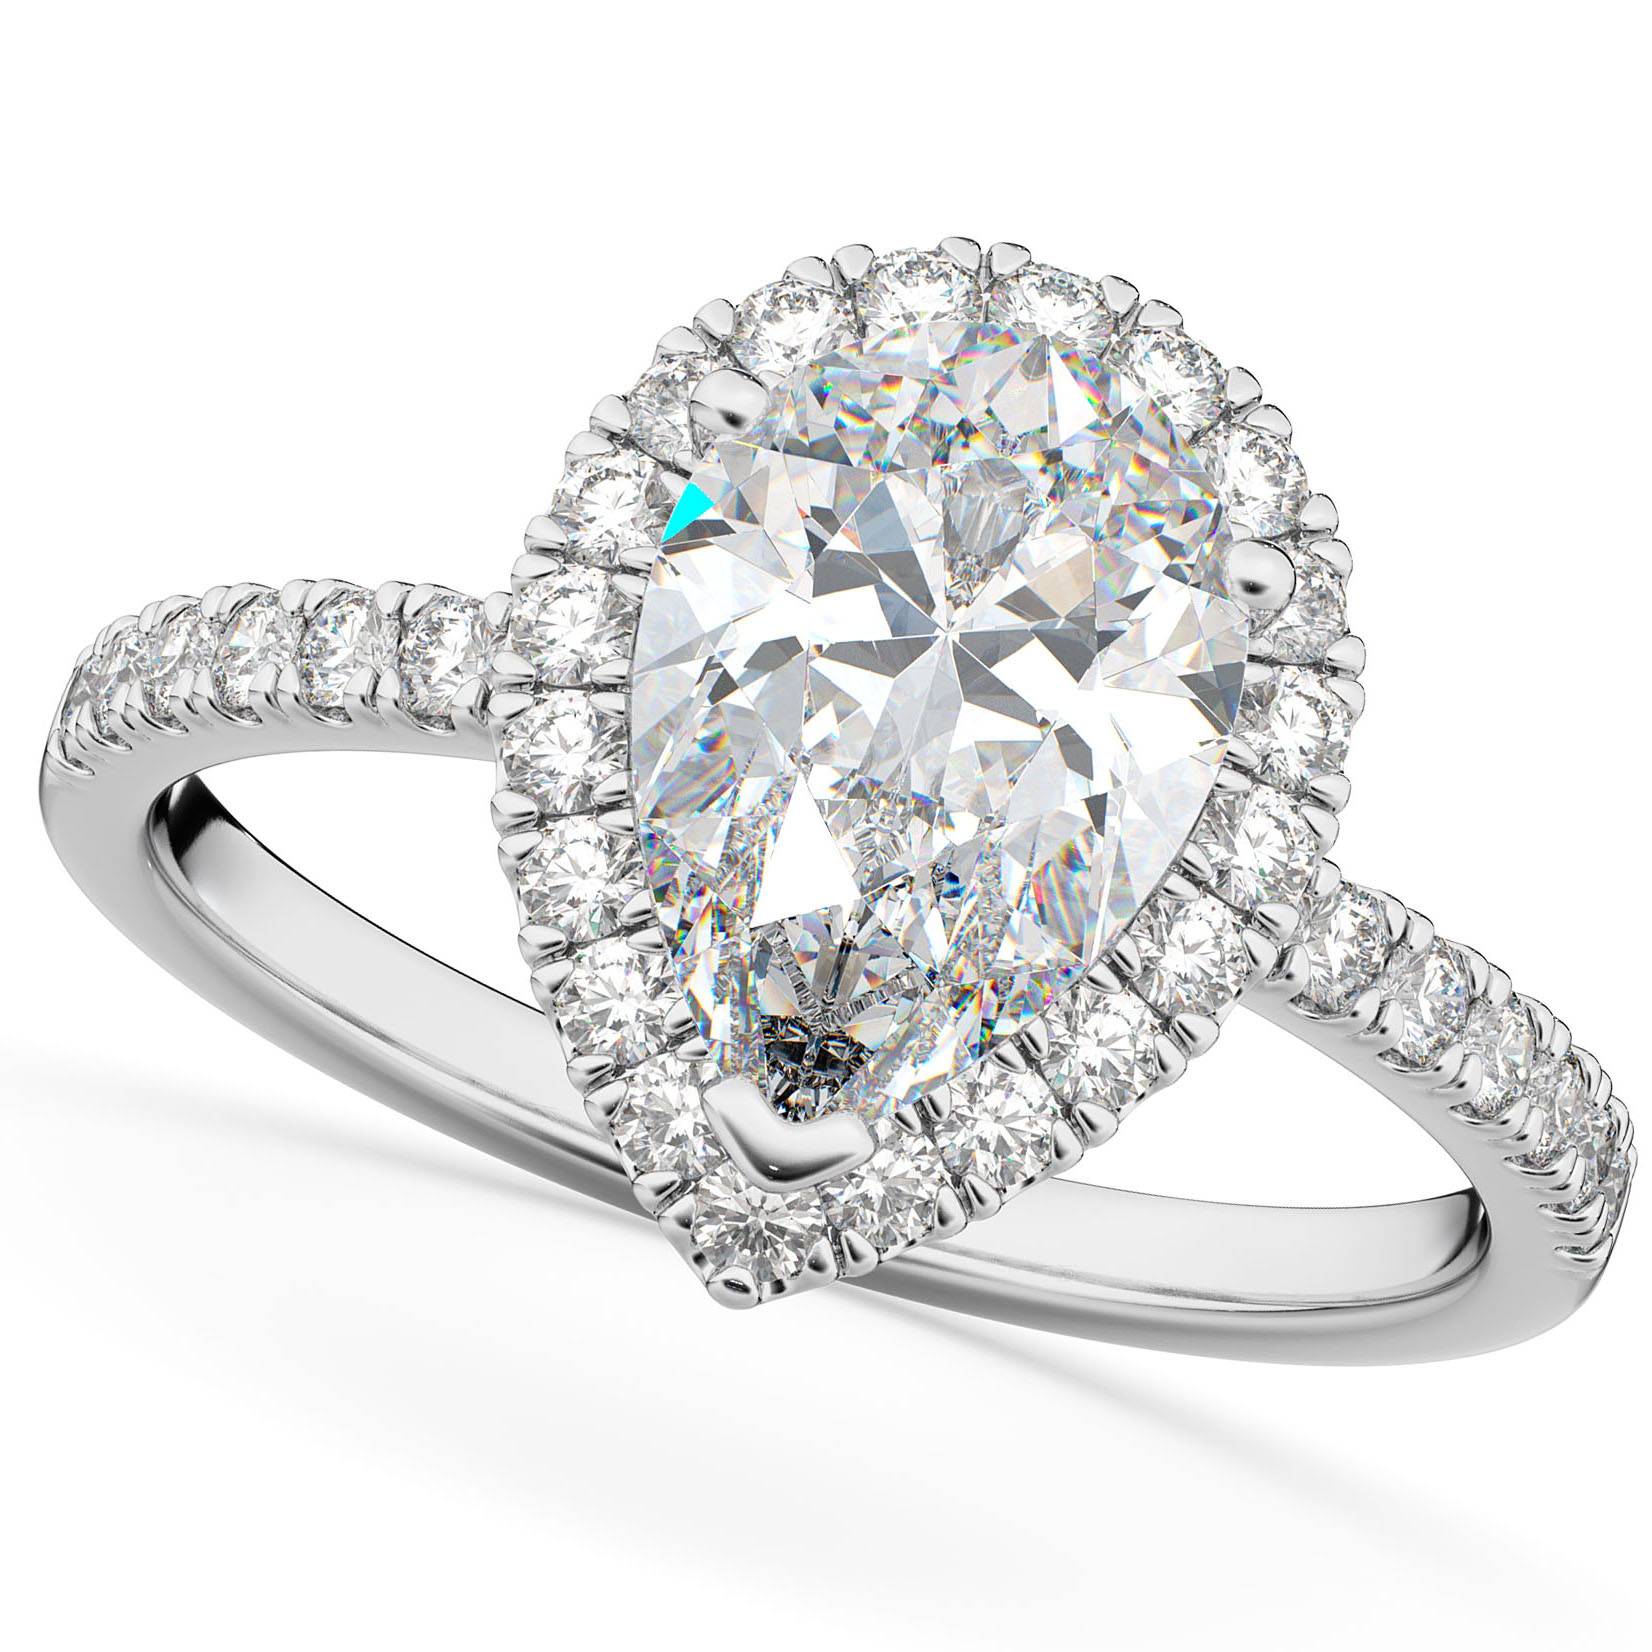 Pear Cut Halo Moissanite & Diamond Engagement Ring 14K White Gold 2.44ct by Allurez.